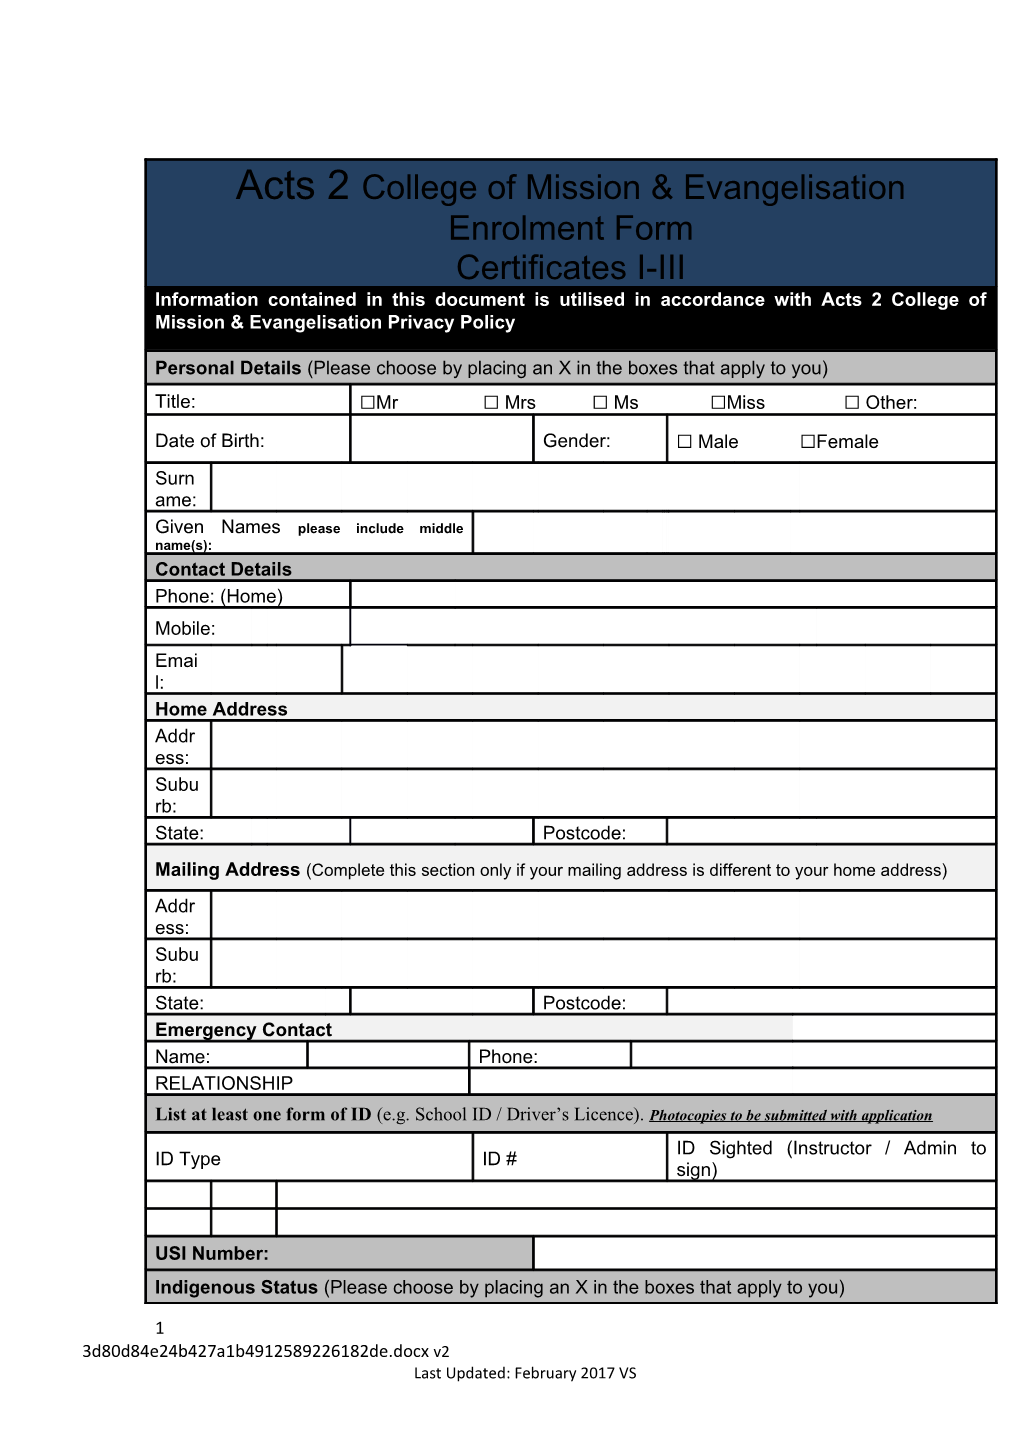 Enrolment Application Form Certs I-III V2 V2 Last Updated: February 2017 VS